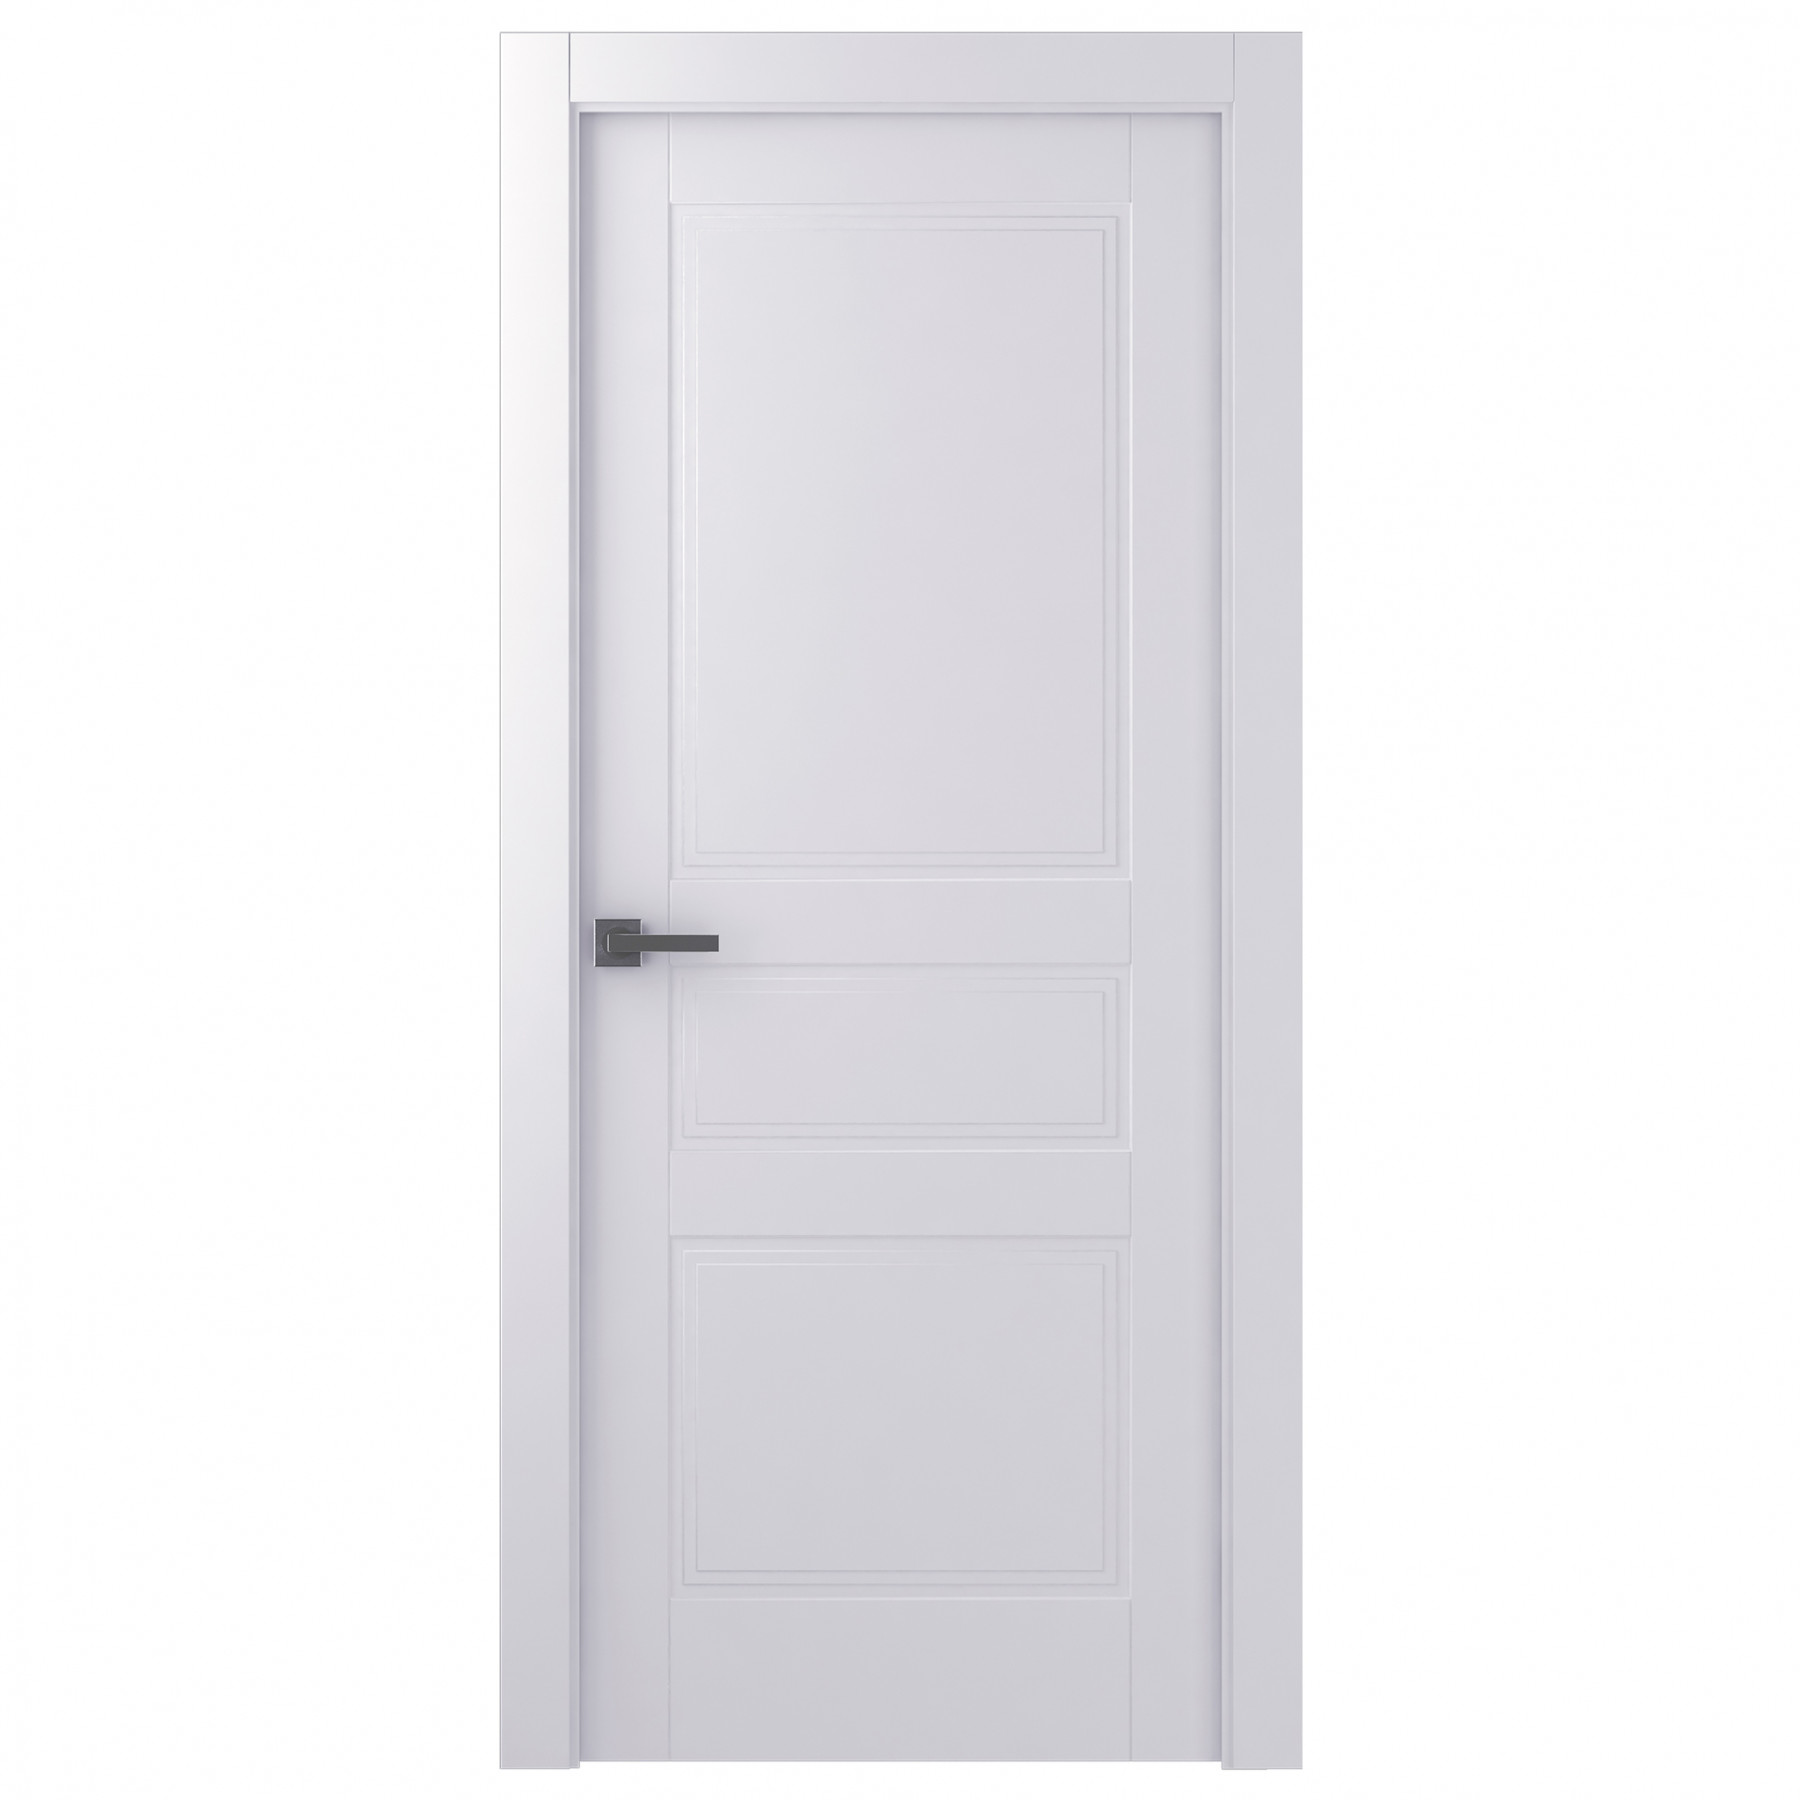 Купить Дверь межкомнатная глухая Belwooddoors Инари 900х2000 мм белая